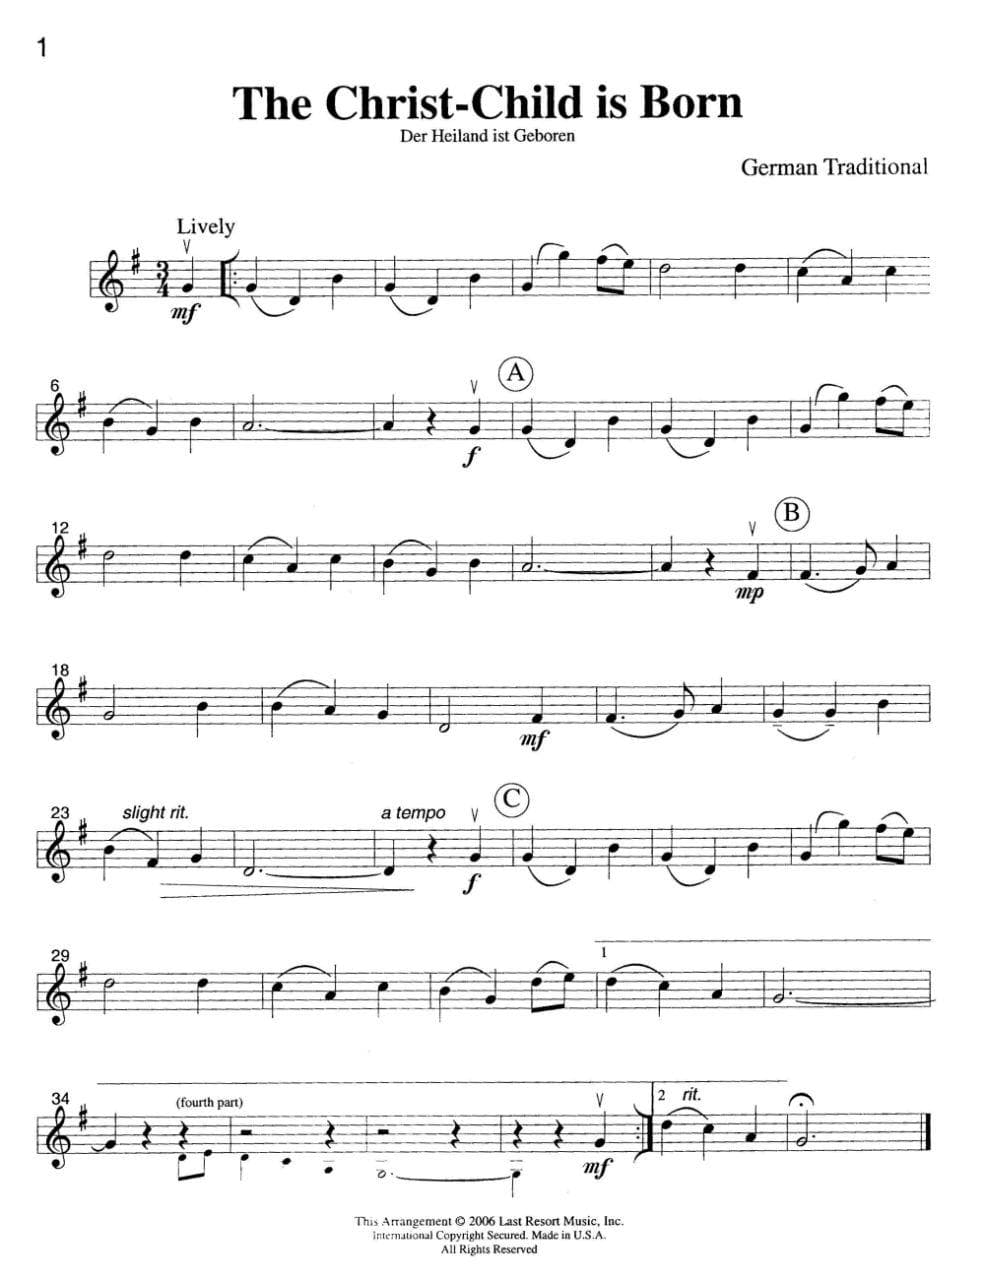 Intermediate Music for Four: Christmas - Part 1 (Violin/Oboe/Flute) - arranged by Daniel Kelley - Last Resort Music